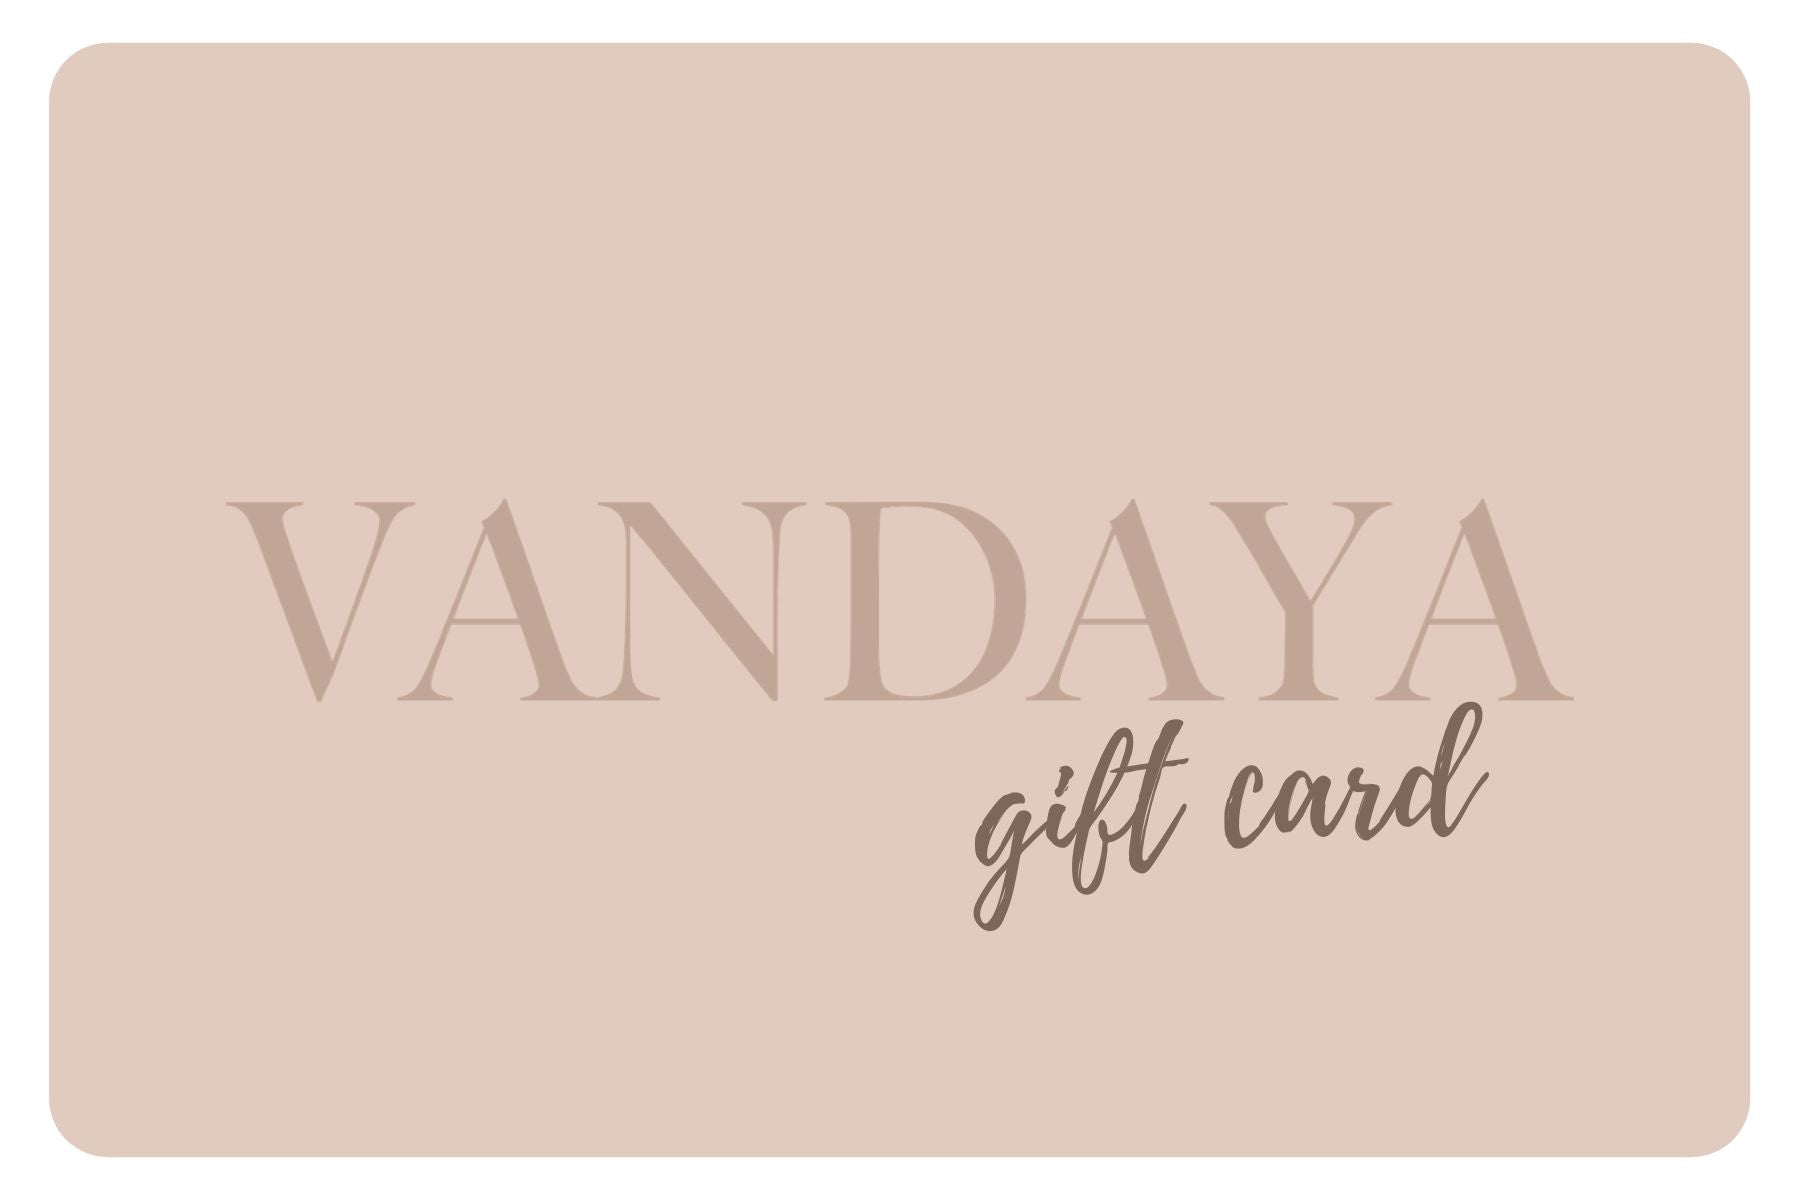 VANDAYA Gift Card - Vandaya